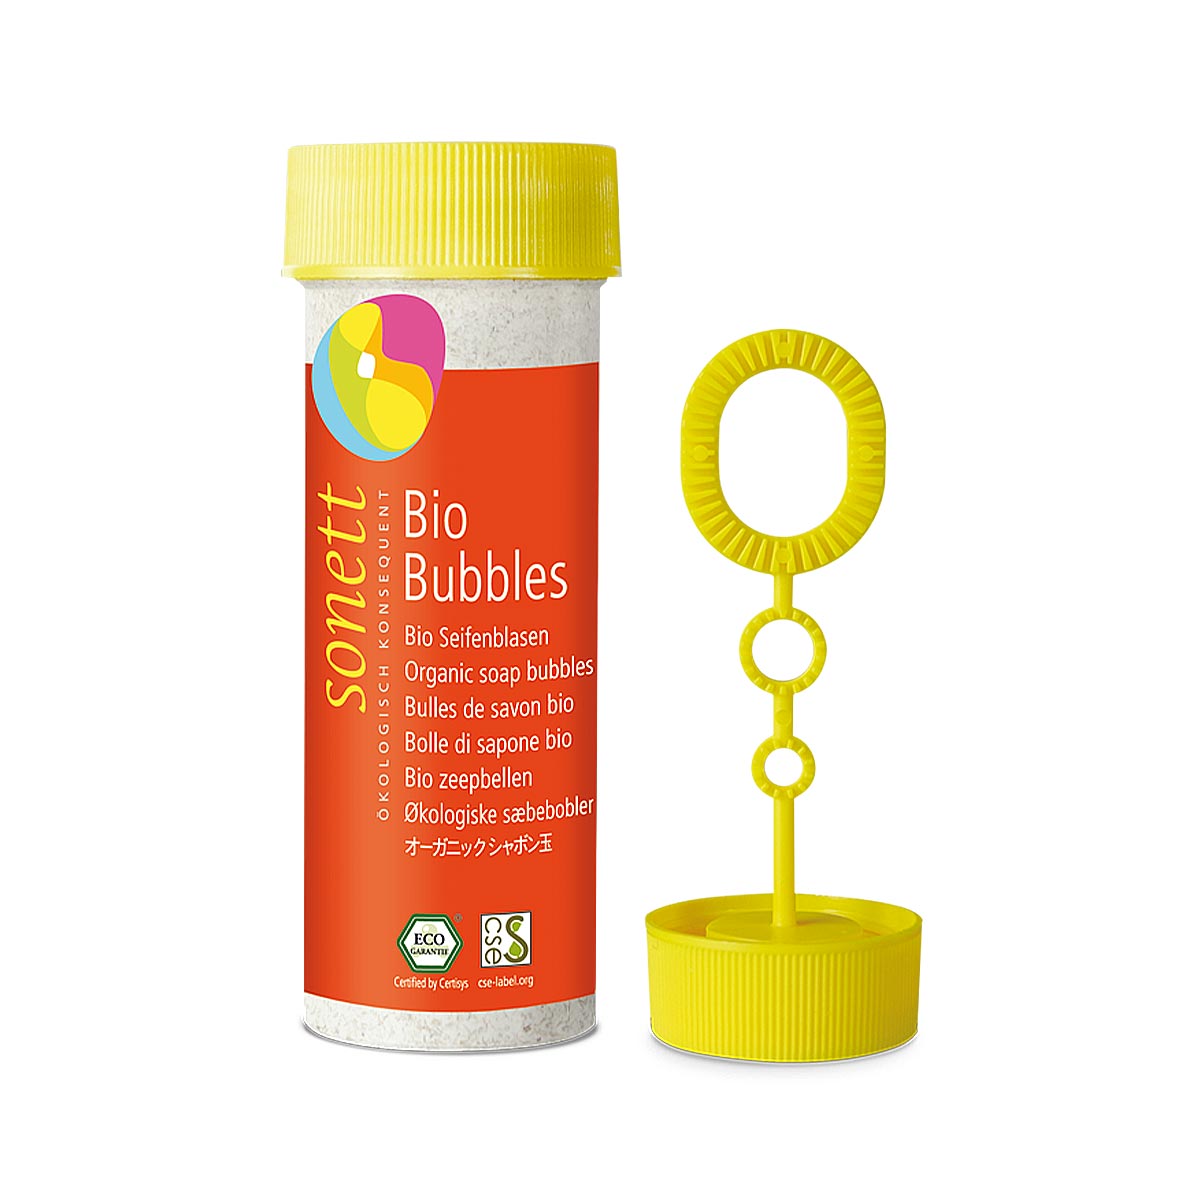 Sæbebobler Bio bubbles Sonett, 45 ml - Helsemin